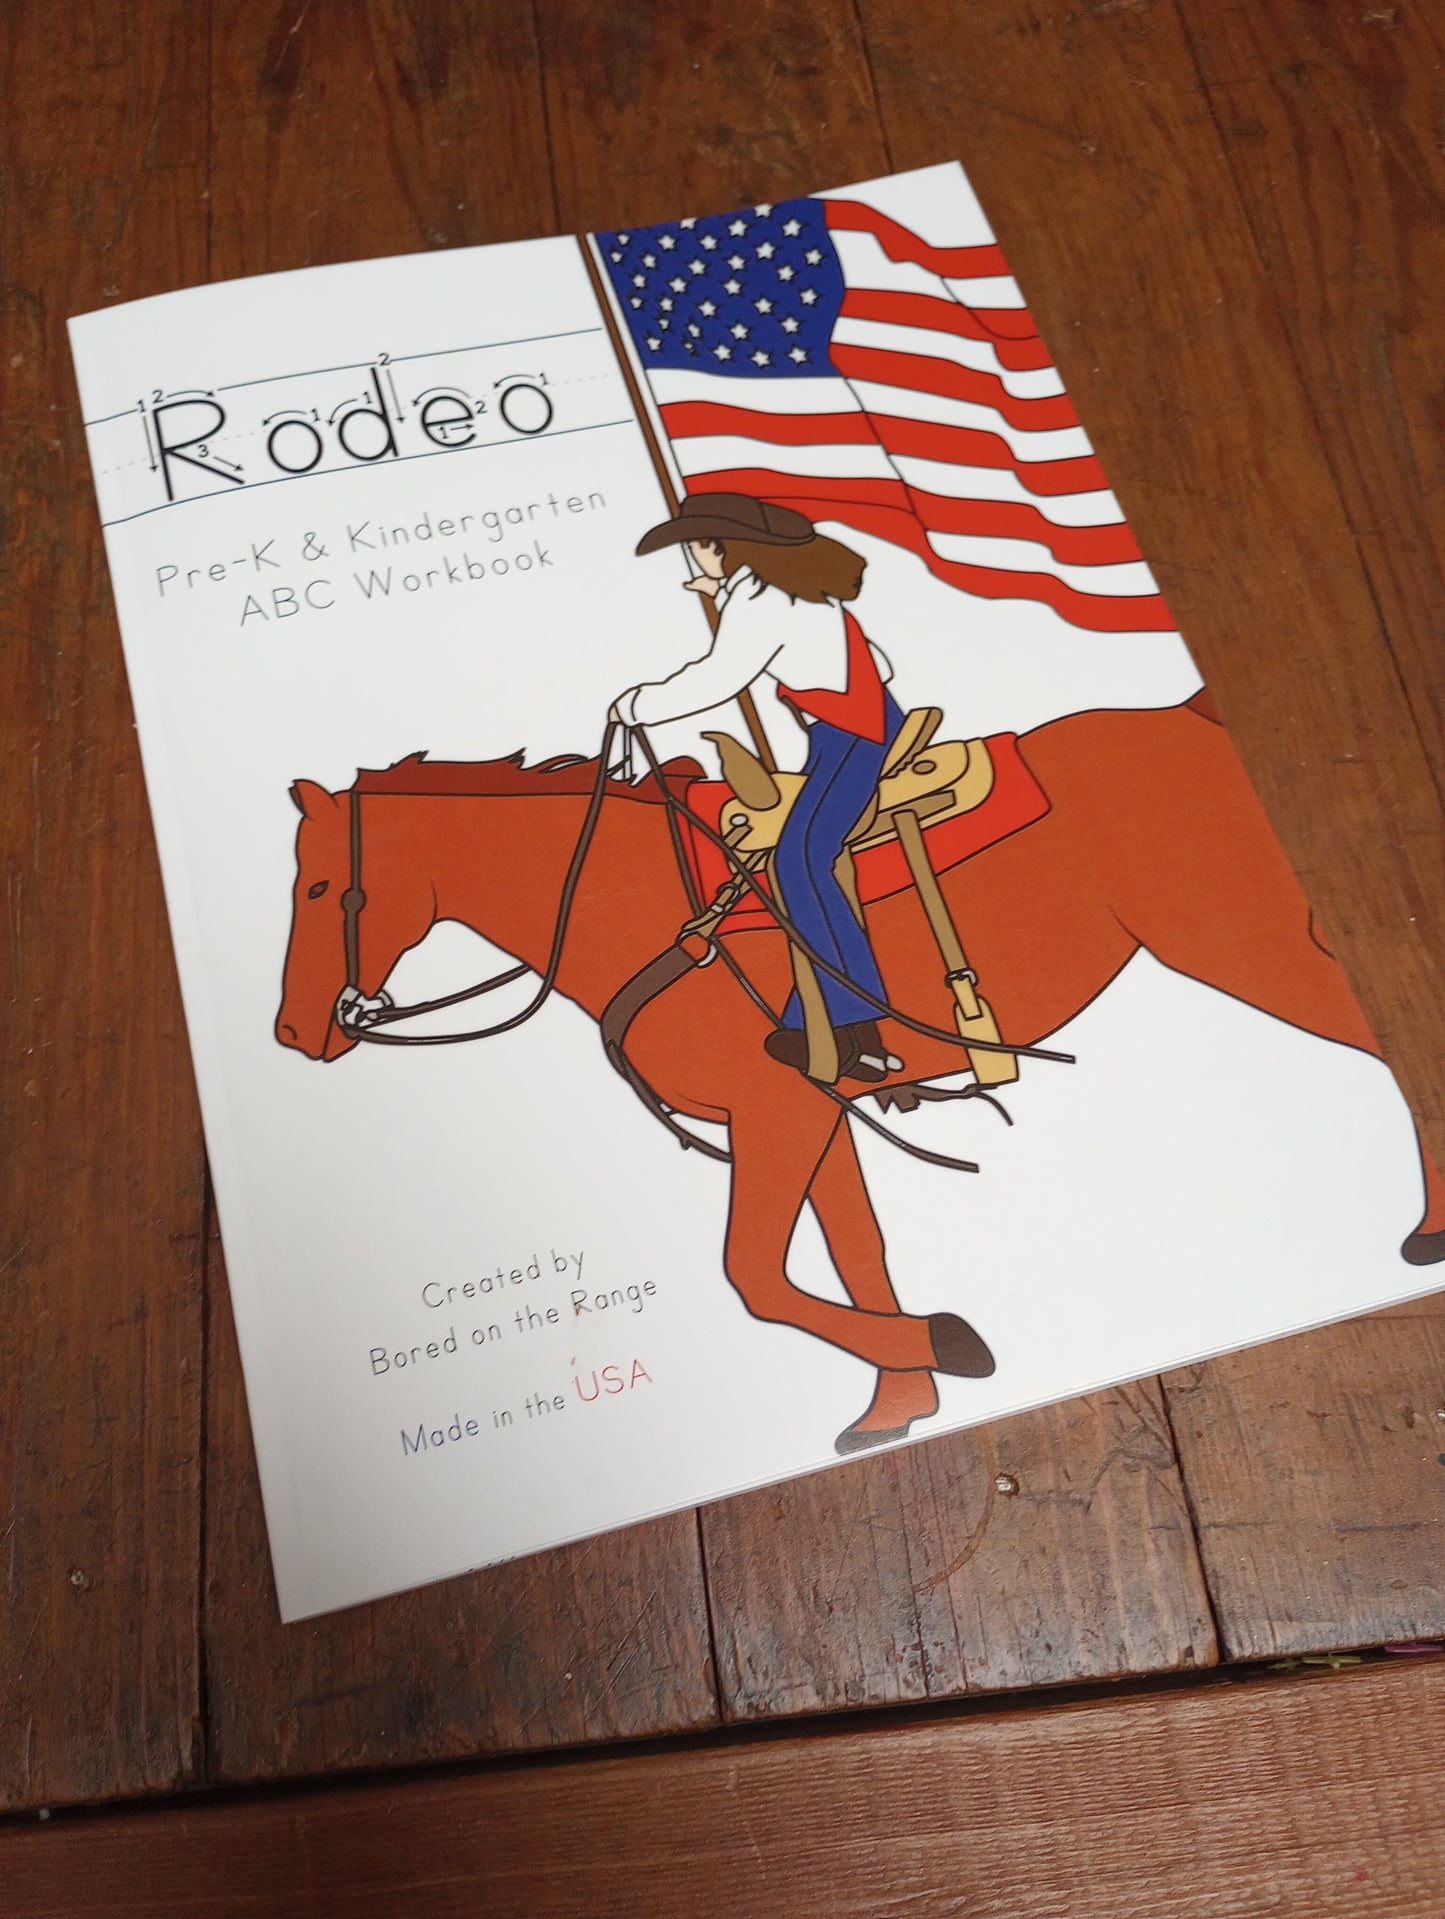 Rodeo Workbook